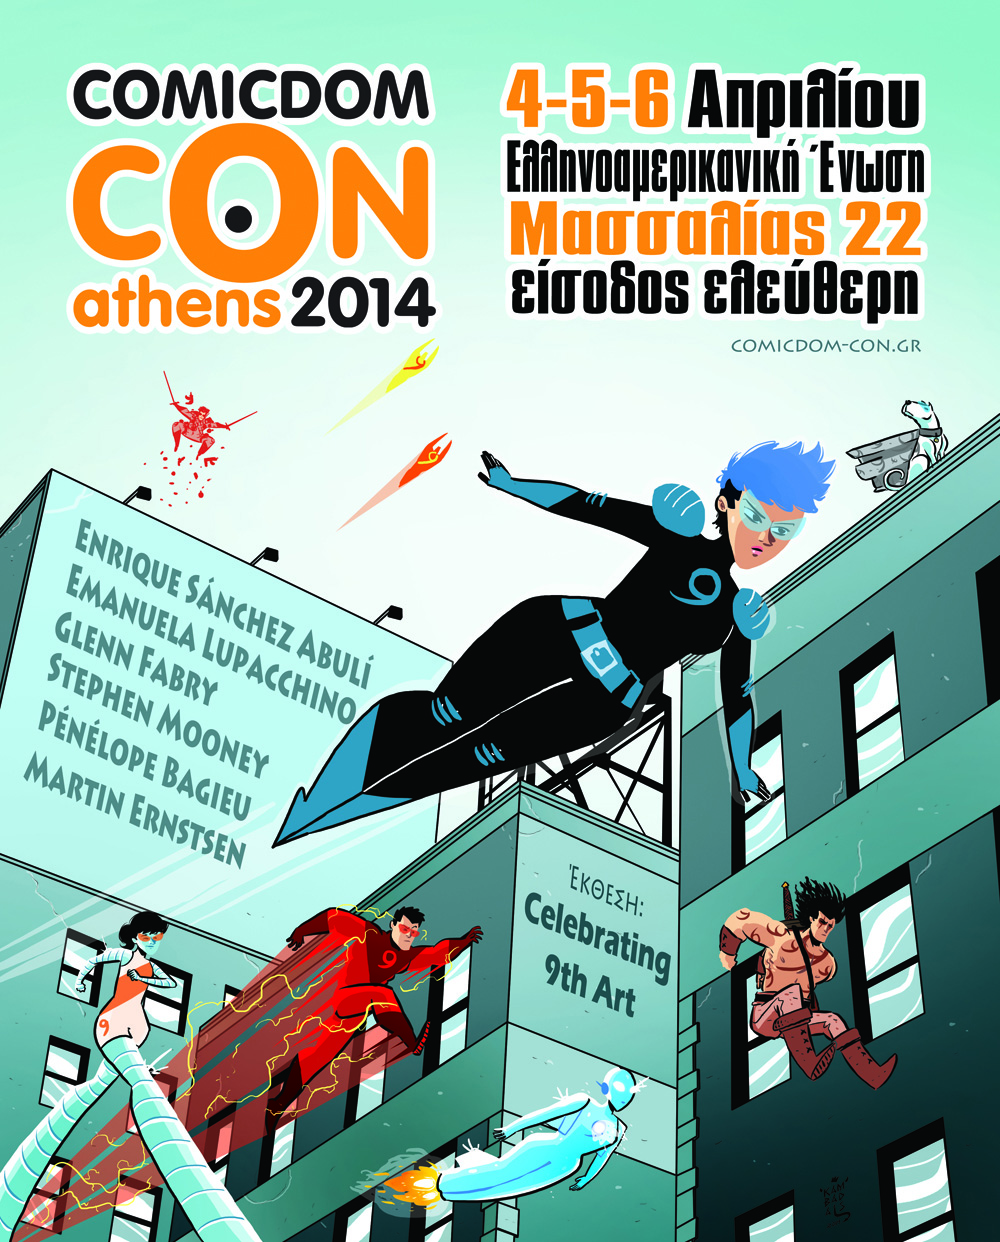 Comicdom Con Athens 2014 από τις 4 ως τις 6 Απριλίου